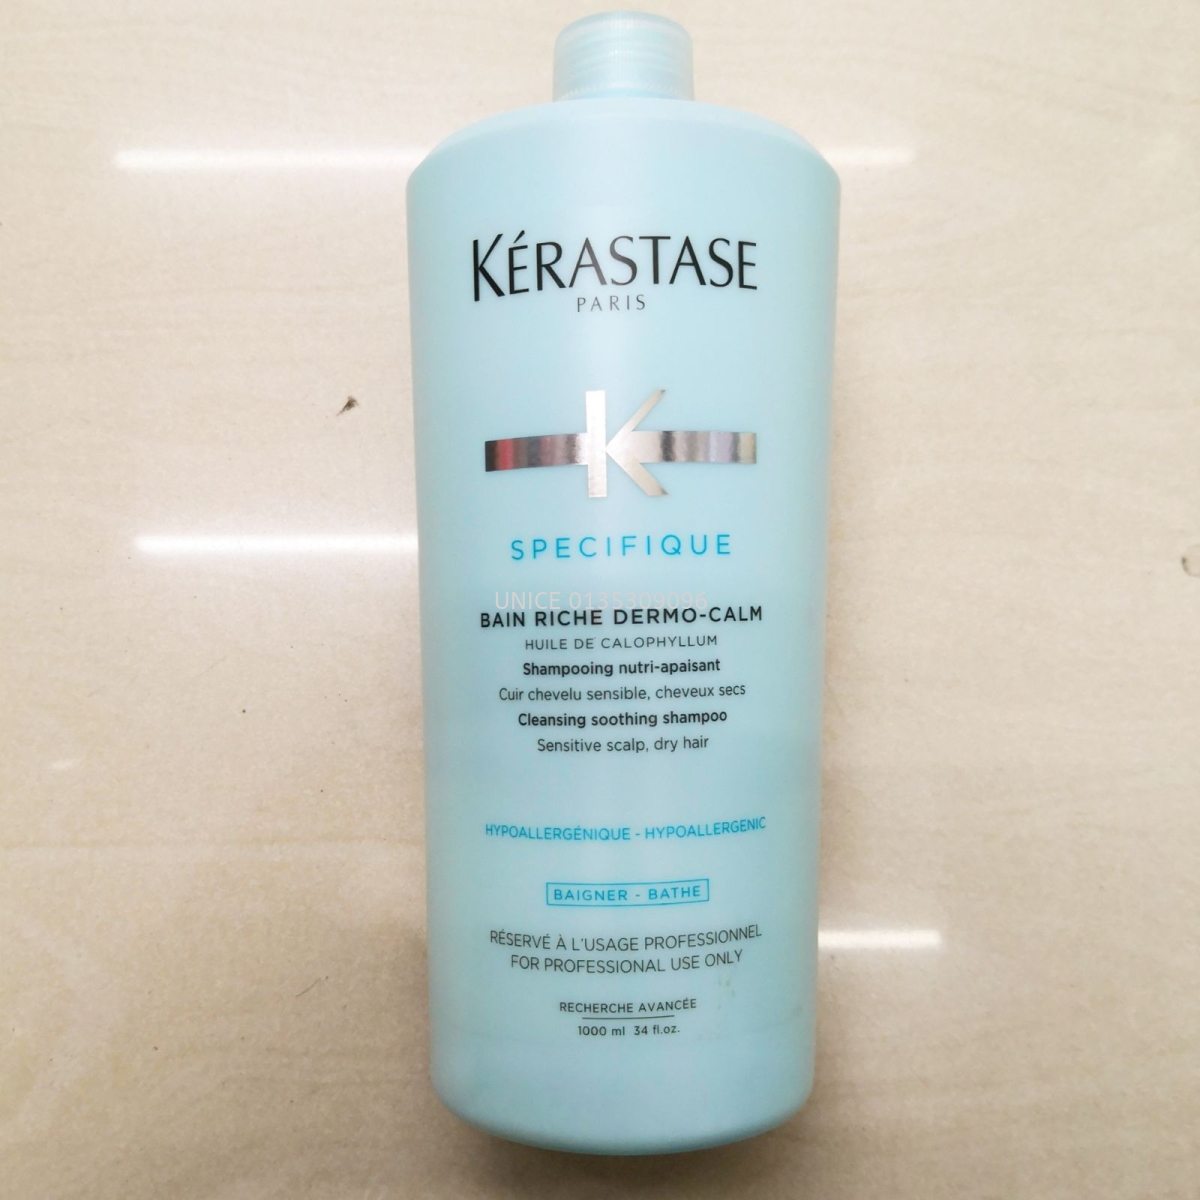 Kerastase Riche Dermo-Calm Shampoo 1000ml SHAMPOO Johor Bahru Malaysia Supplier, Wholesaler